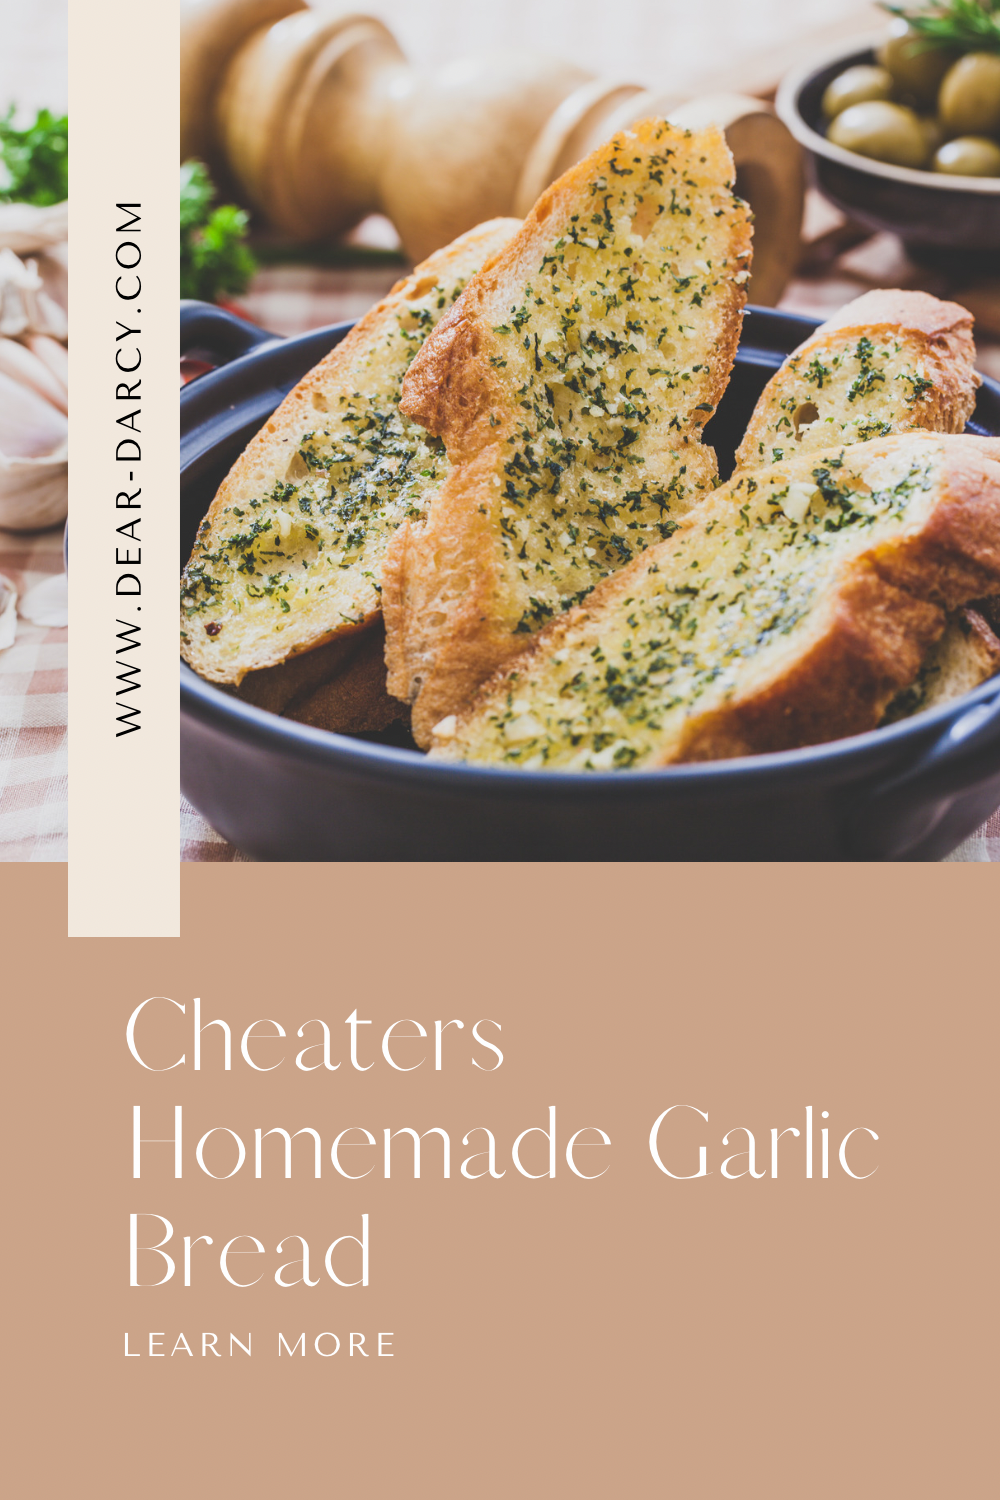 Cheaters Homemade garlic bread